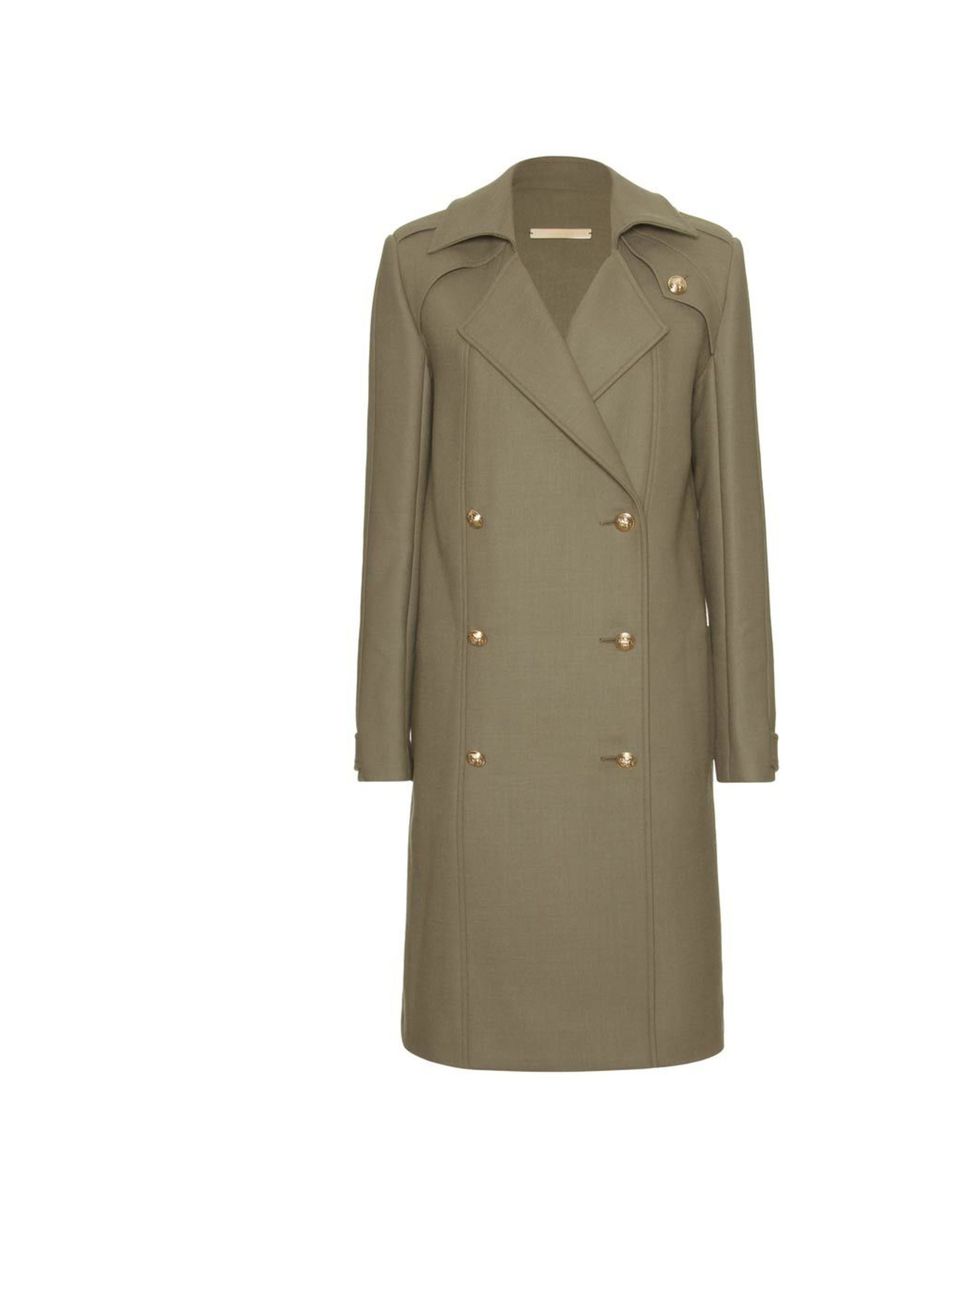 <p>Victoria Beckham military coat, £2,450, at <a href="http://www.mytheresa.com/uk_en/military-coat-166548.html">mytheresa.com</a></p>